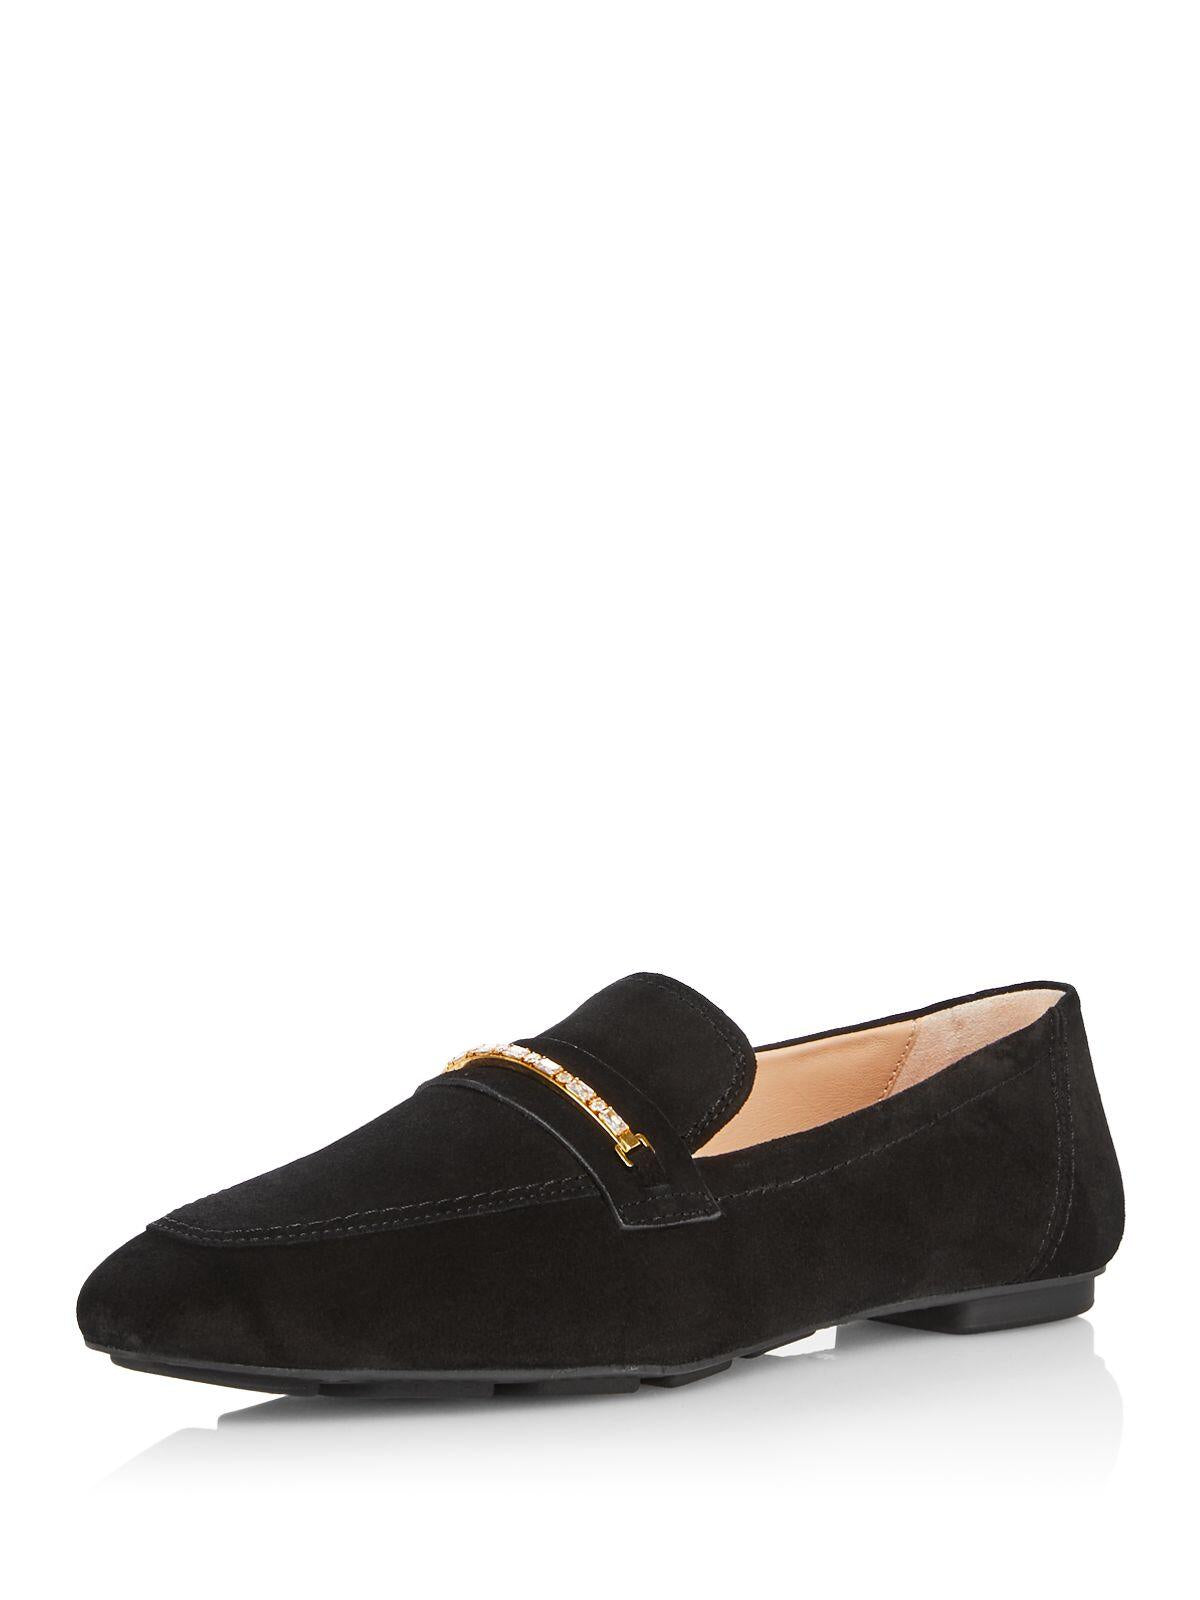 STUART WEITZMAN Womens Black Crystal Hardware Padded Jet Almond Toe Slip On Leather Dress Loafers Shoes 8 B